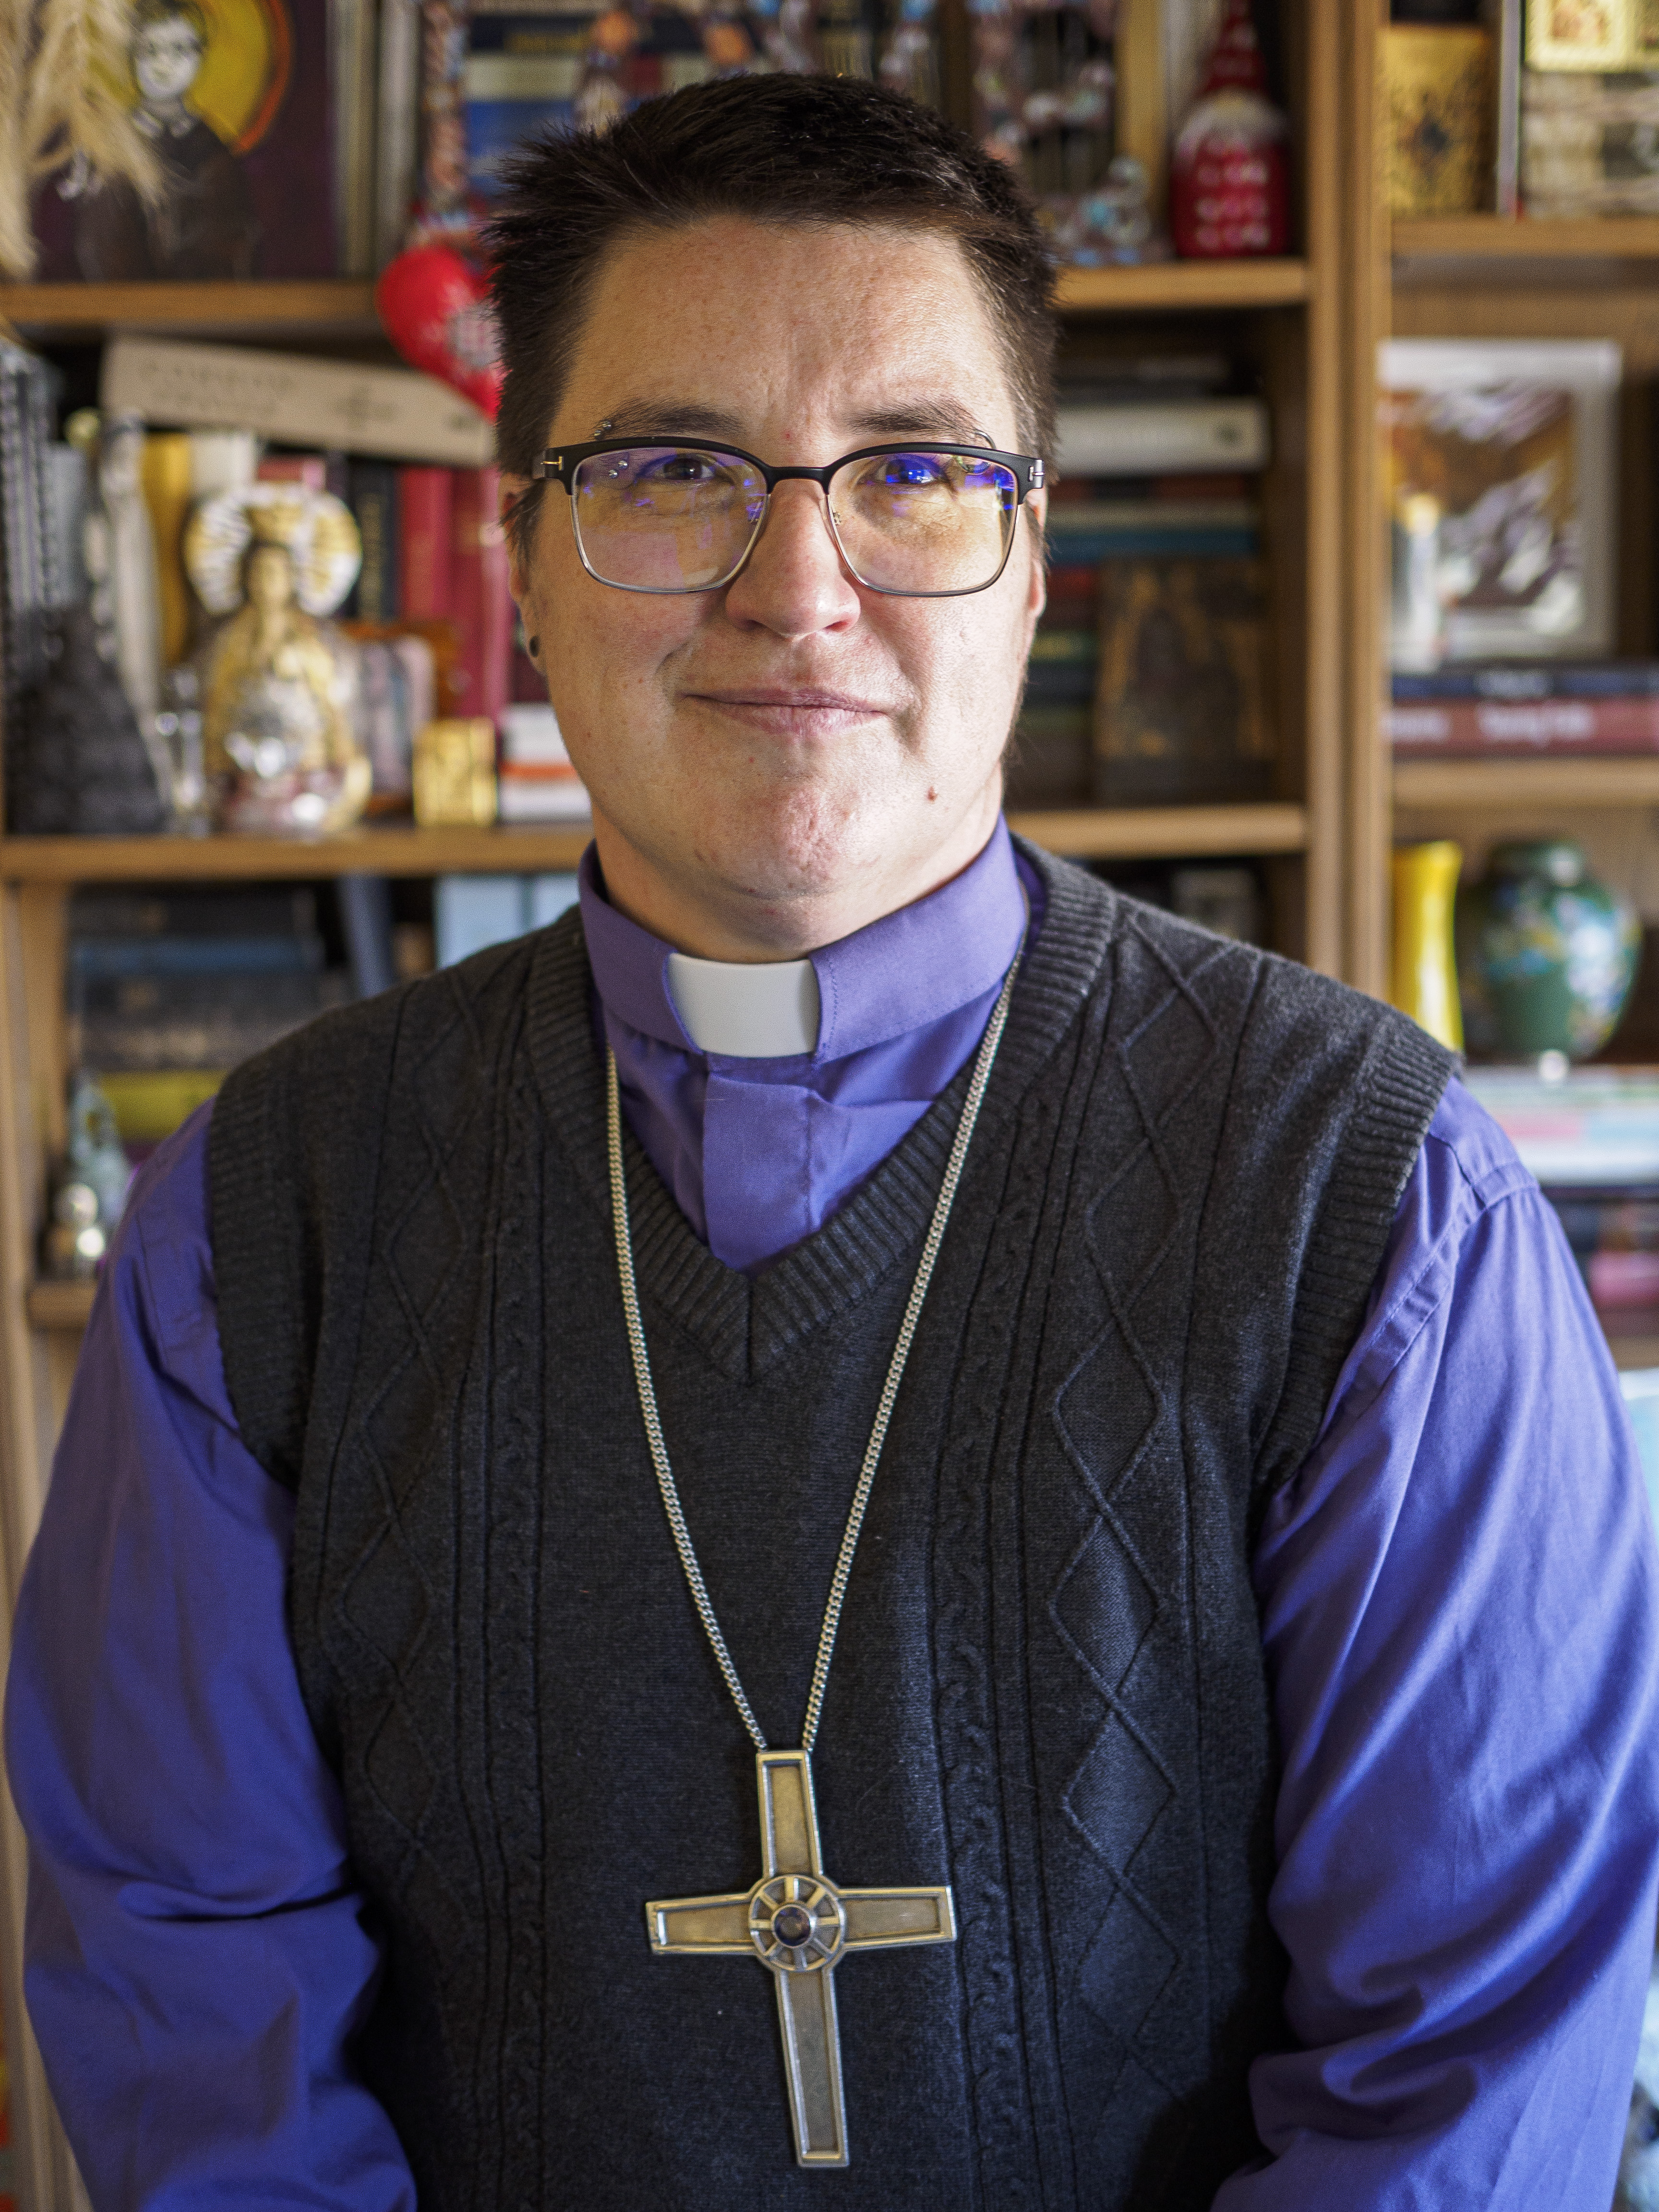 Megan Rohrer er ny biskop i Evangelical Lutheran Church of America (søsterkirken til DNK) og den første transkjønnede biskopen i et stort amerikansk kirkesamfunn.